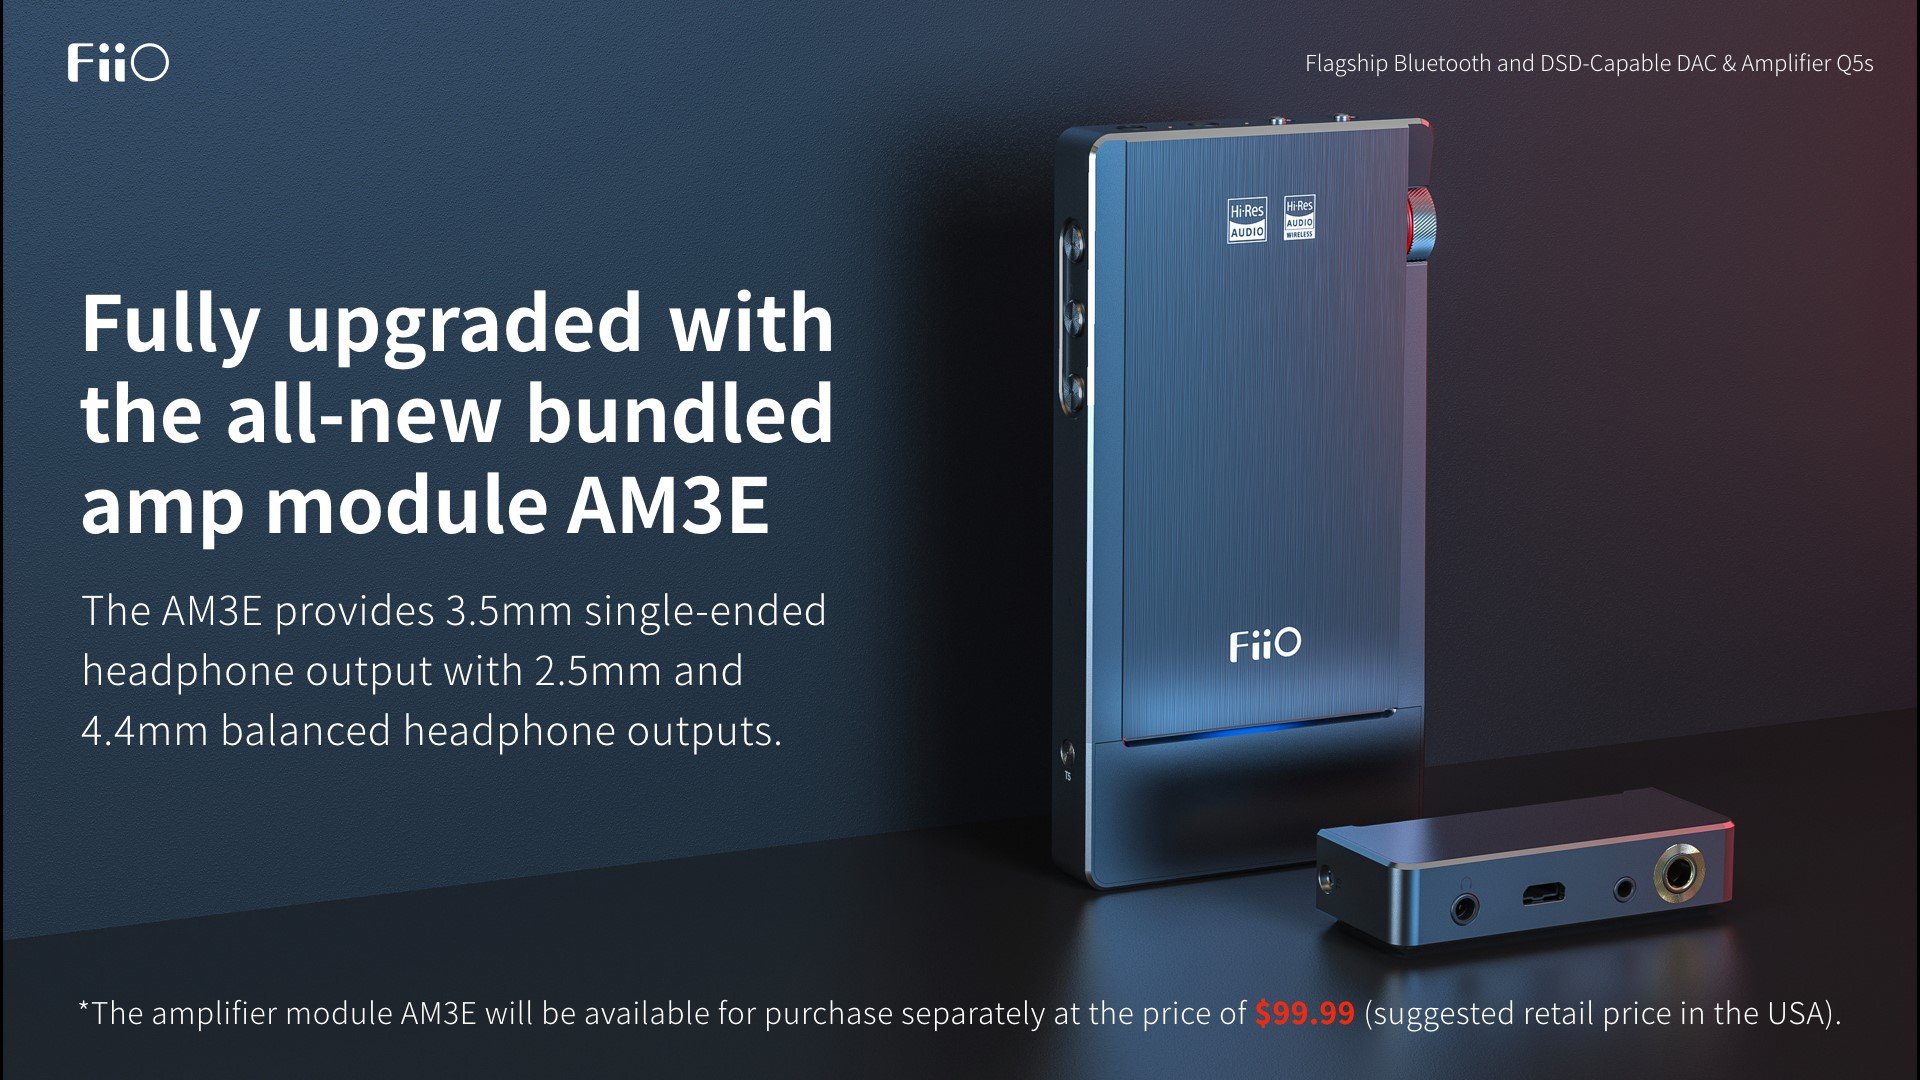 7 New FiiO Products Make Their Debut! - Samma3a Tech